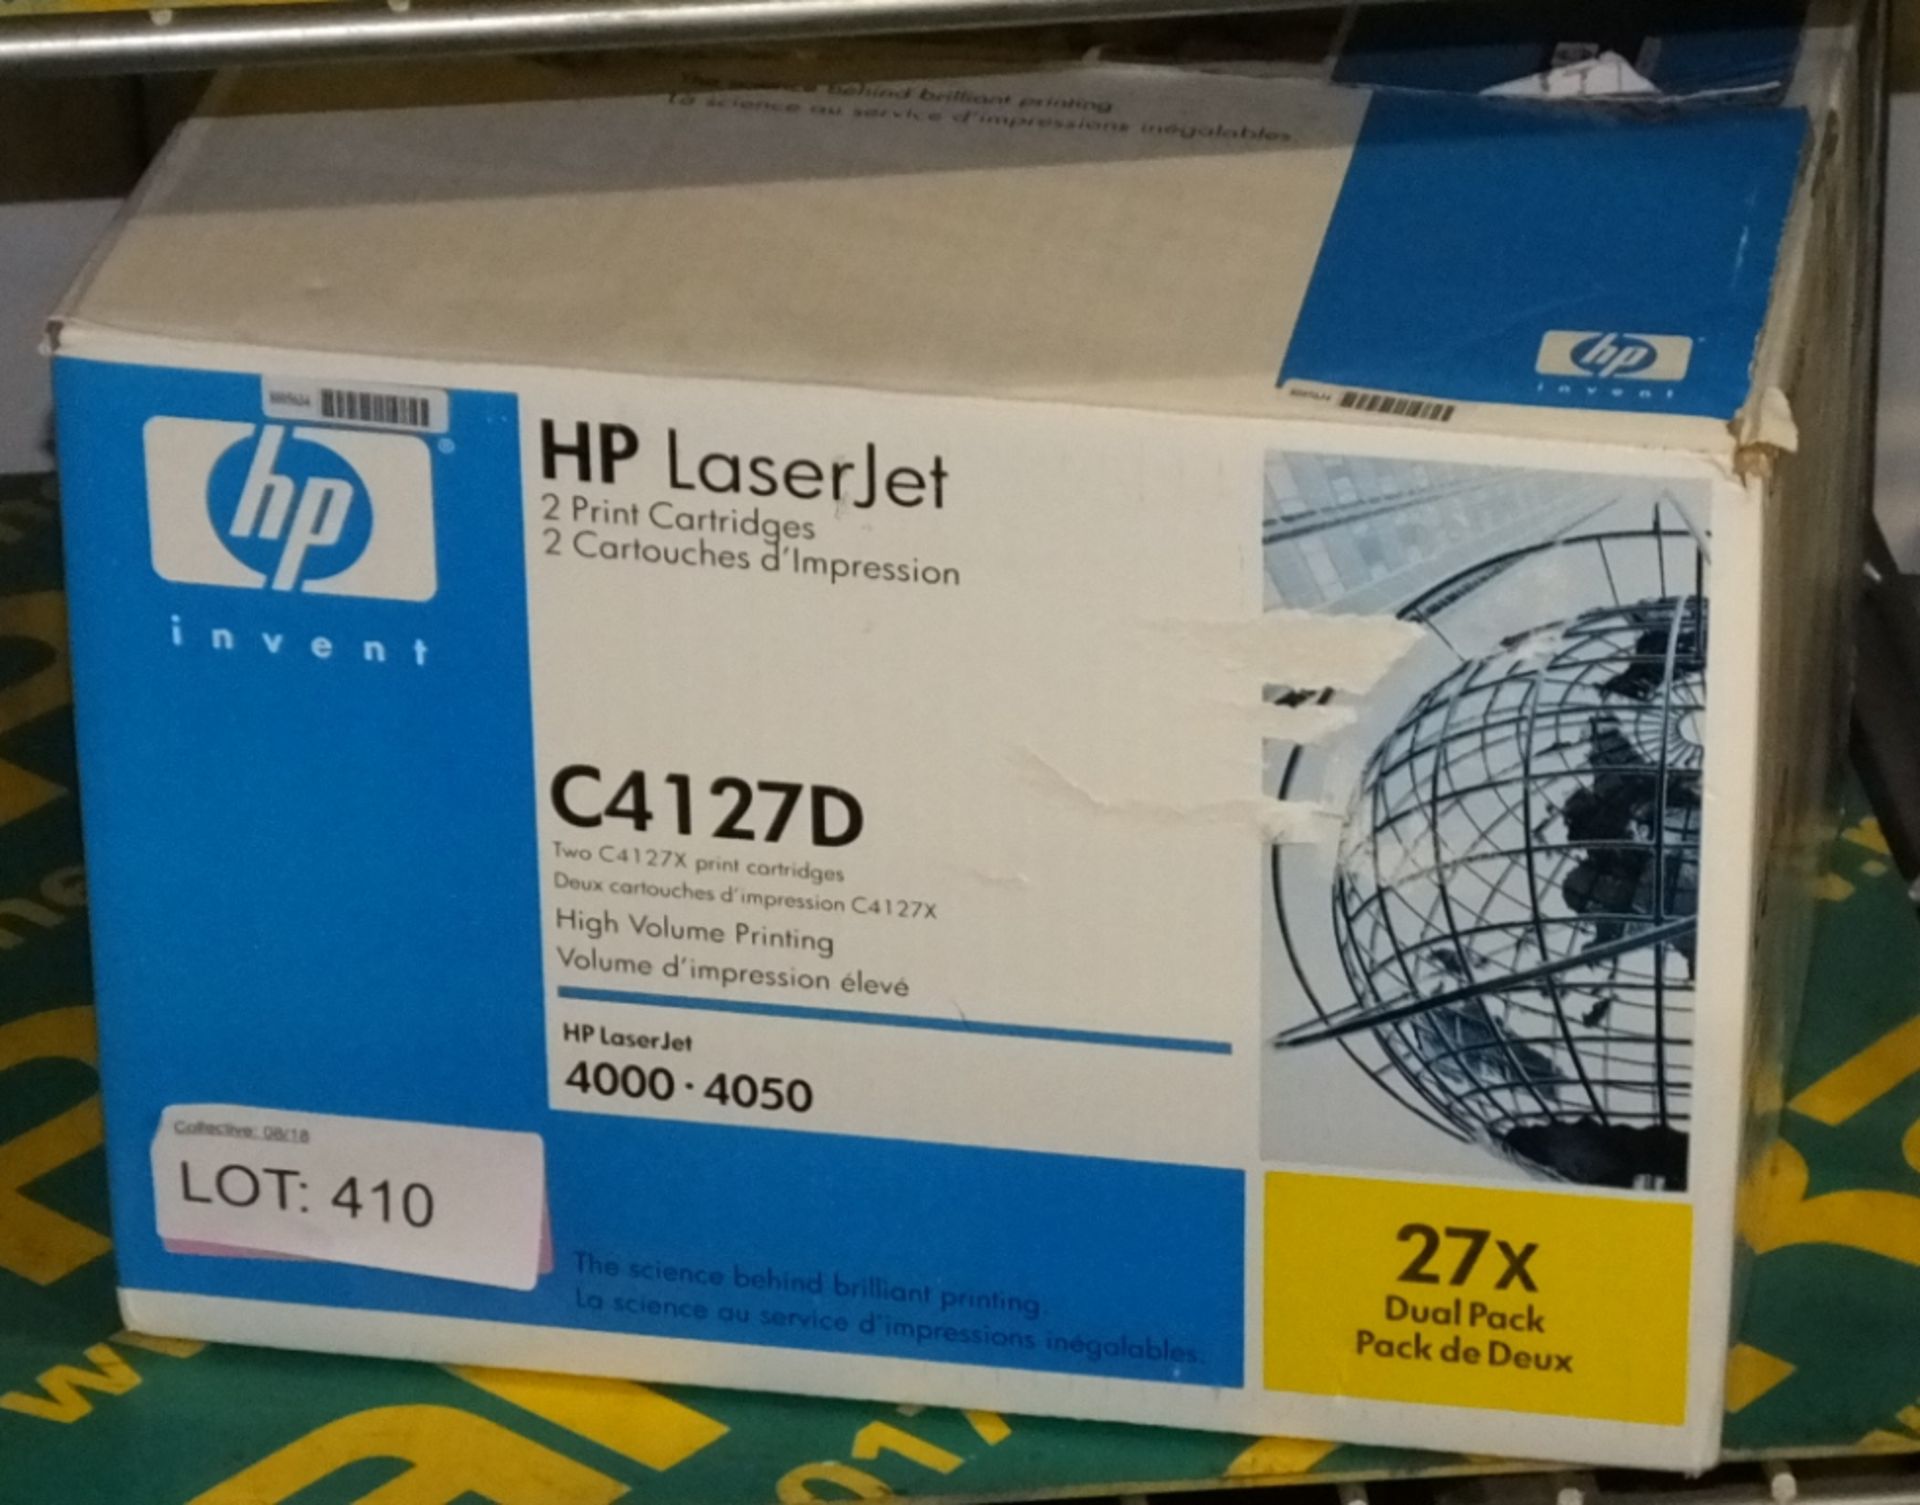 HP Laserjet 2 print cartridges C4127D - 27x Dual Pack